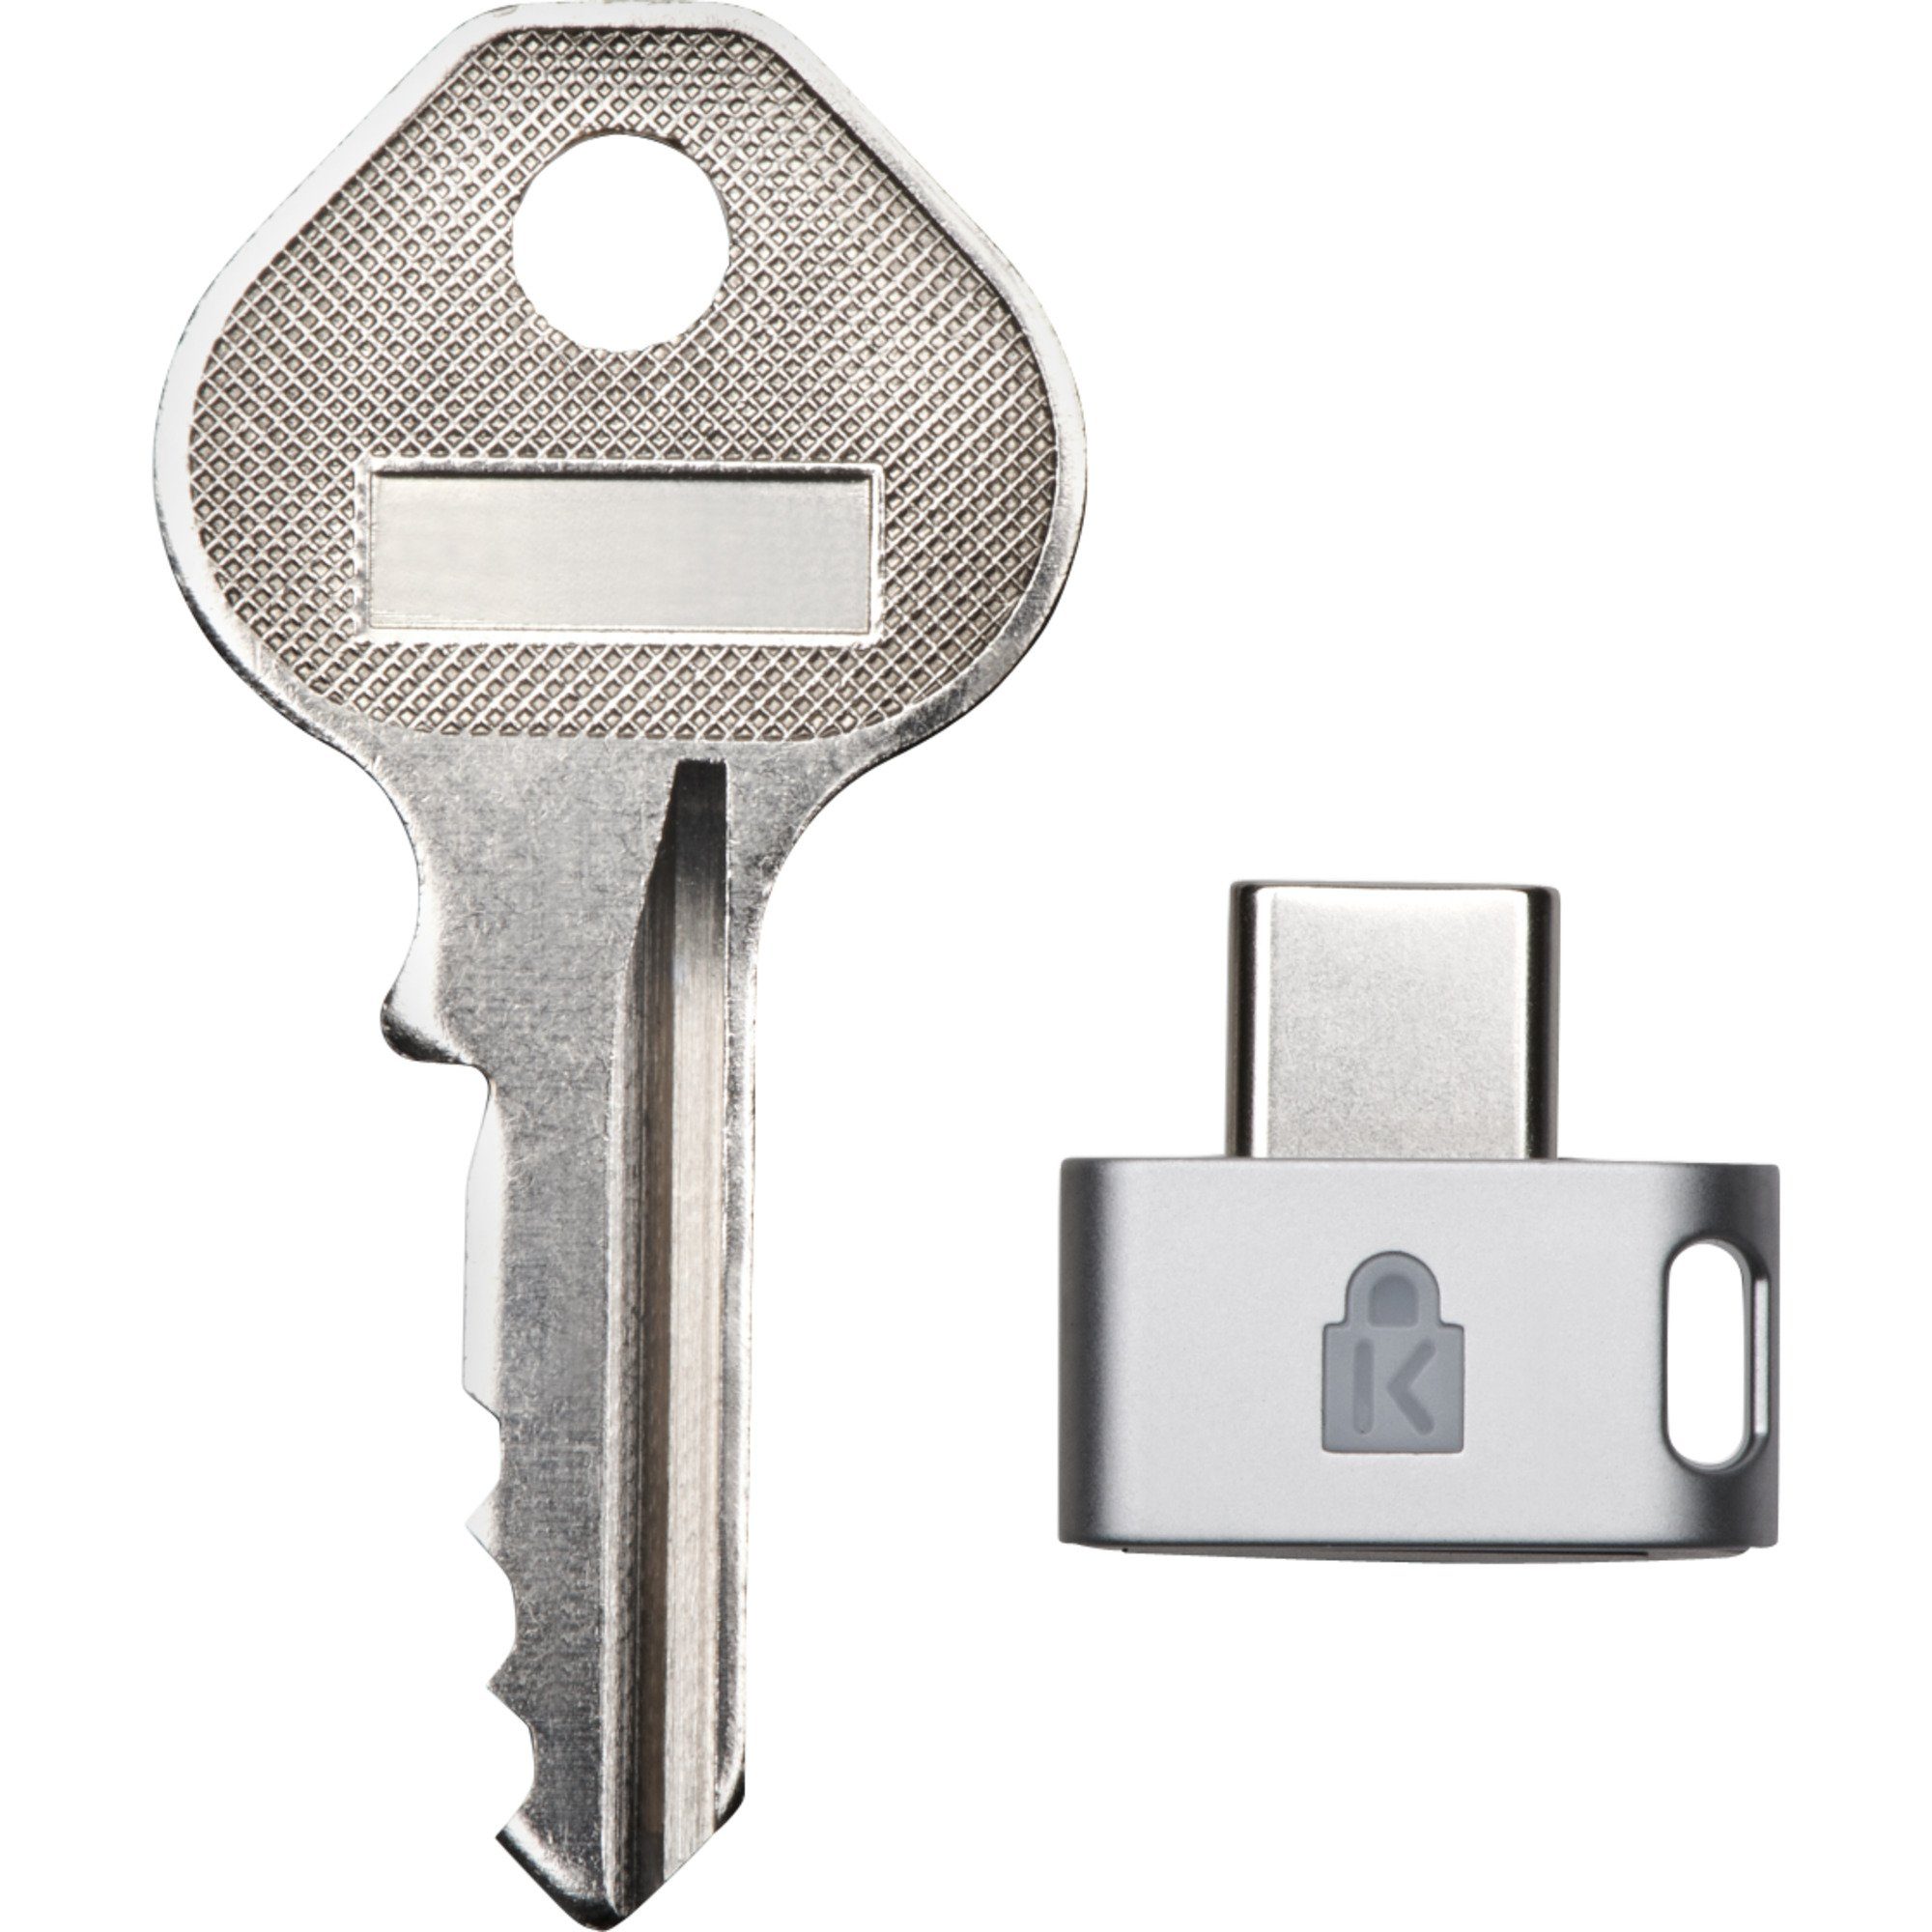 (USB-C Sicherheit, Kensington Laptopschloss Guard, VeriMark KENSINGTON